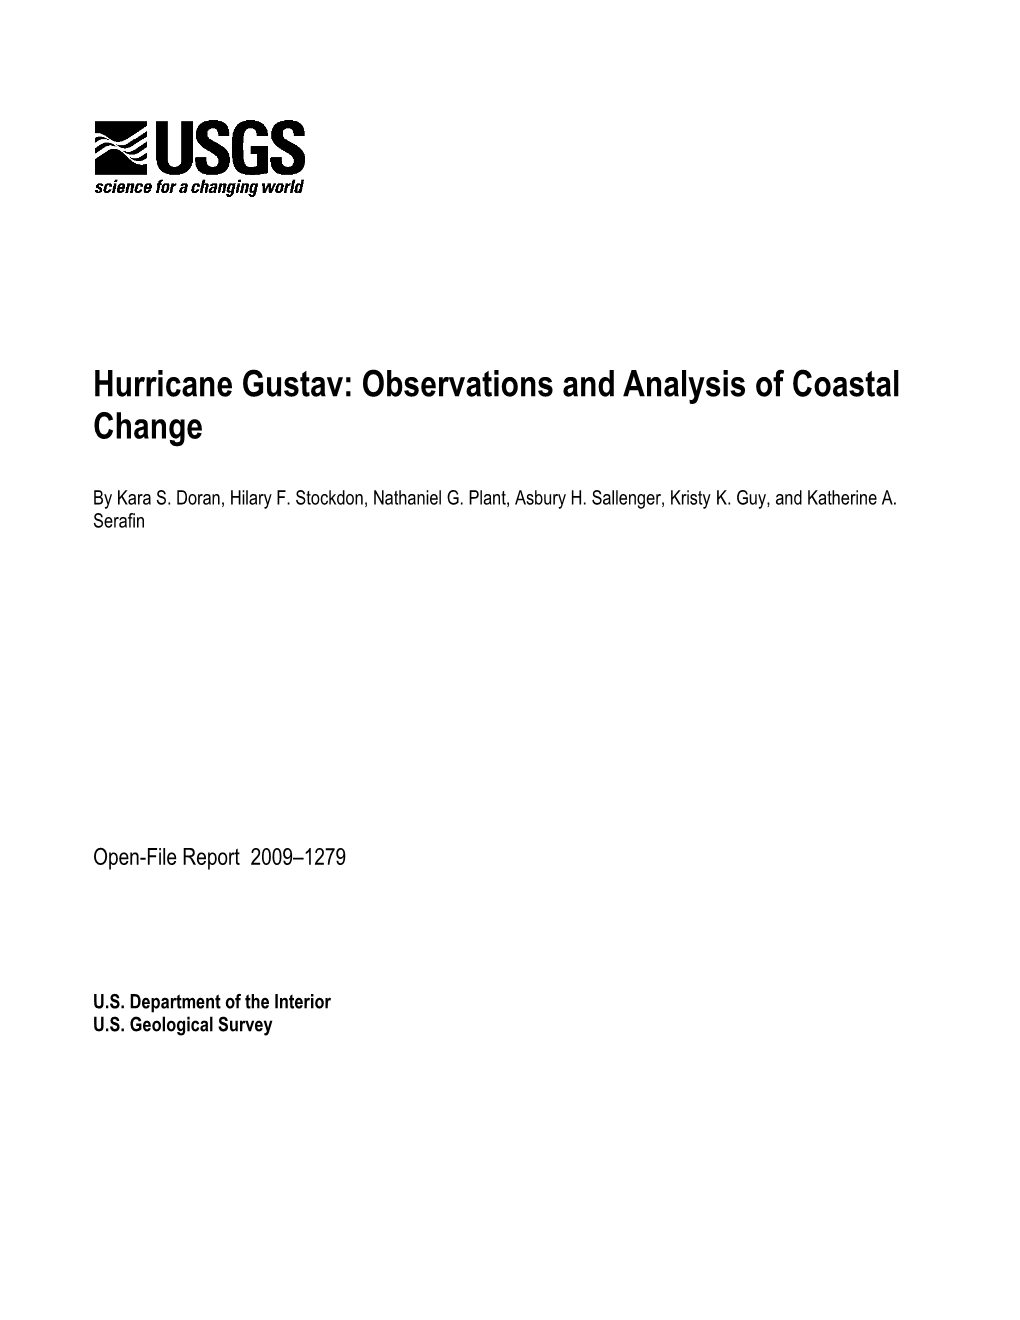 Hurricane Gustav: Observations and Analysis of Coastal Change